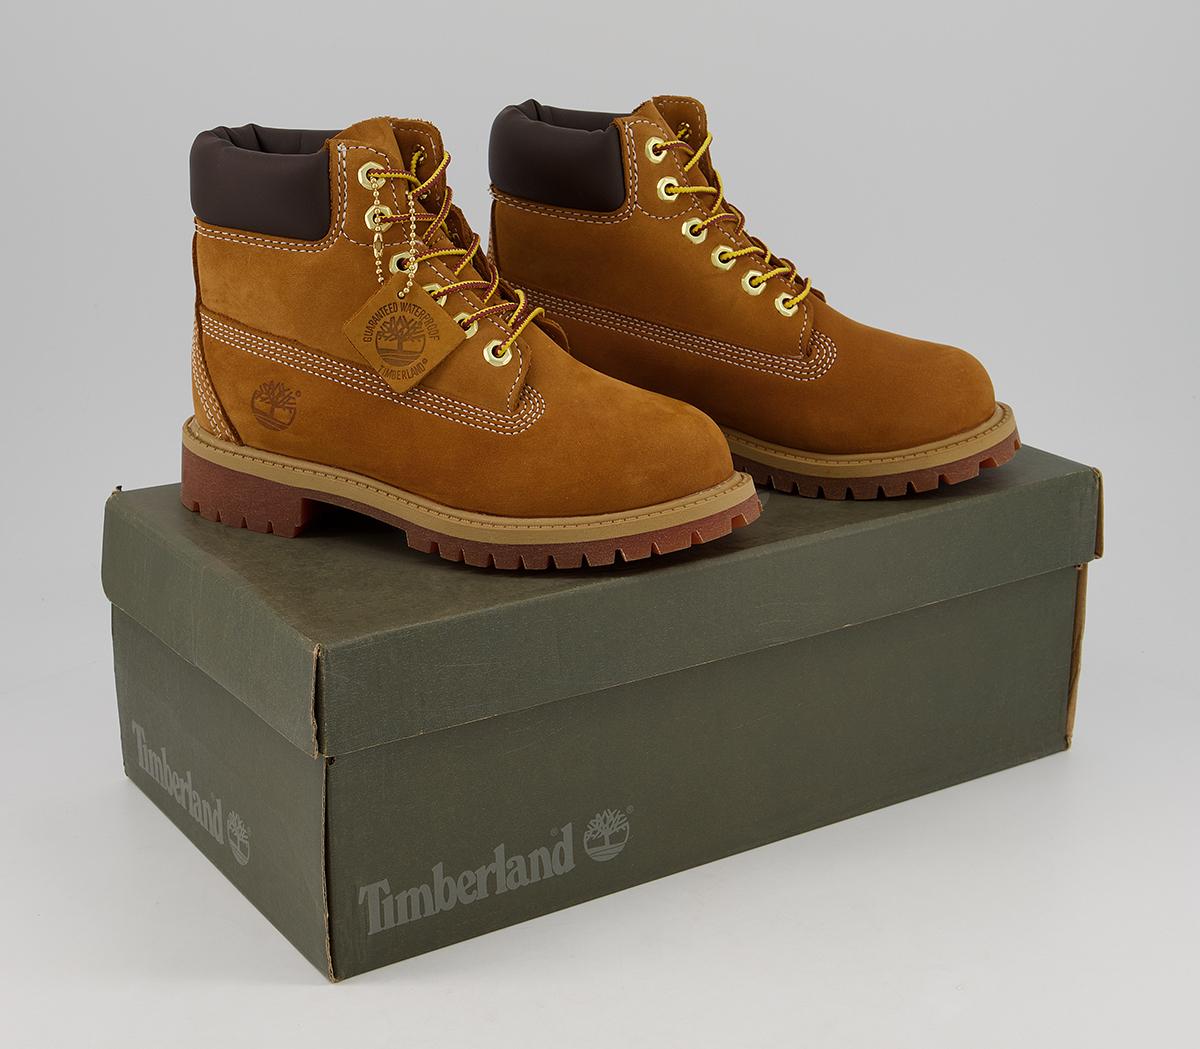 Timberland 6 Inch Youth Classic Boots Wheat Nubuck - Unisex